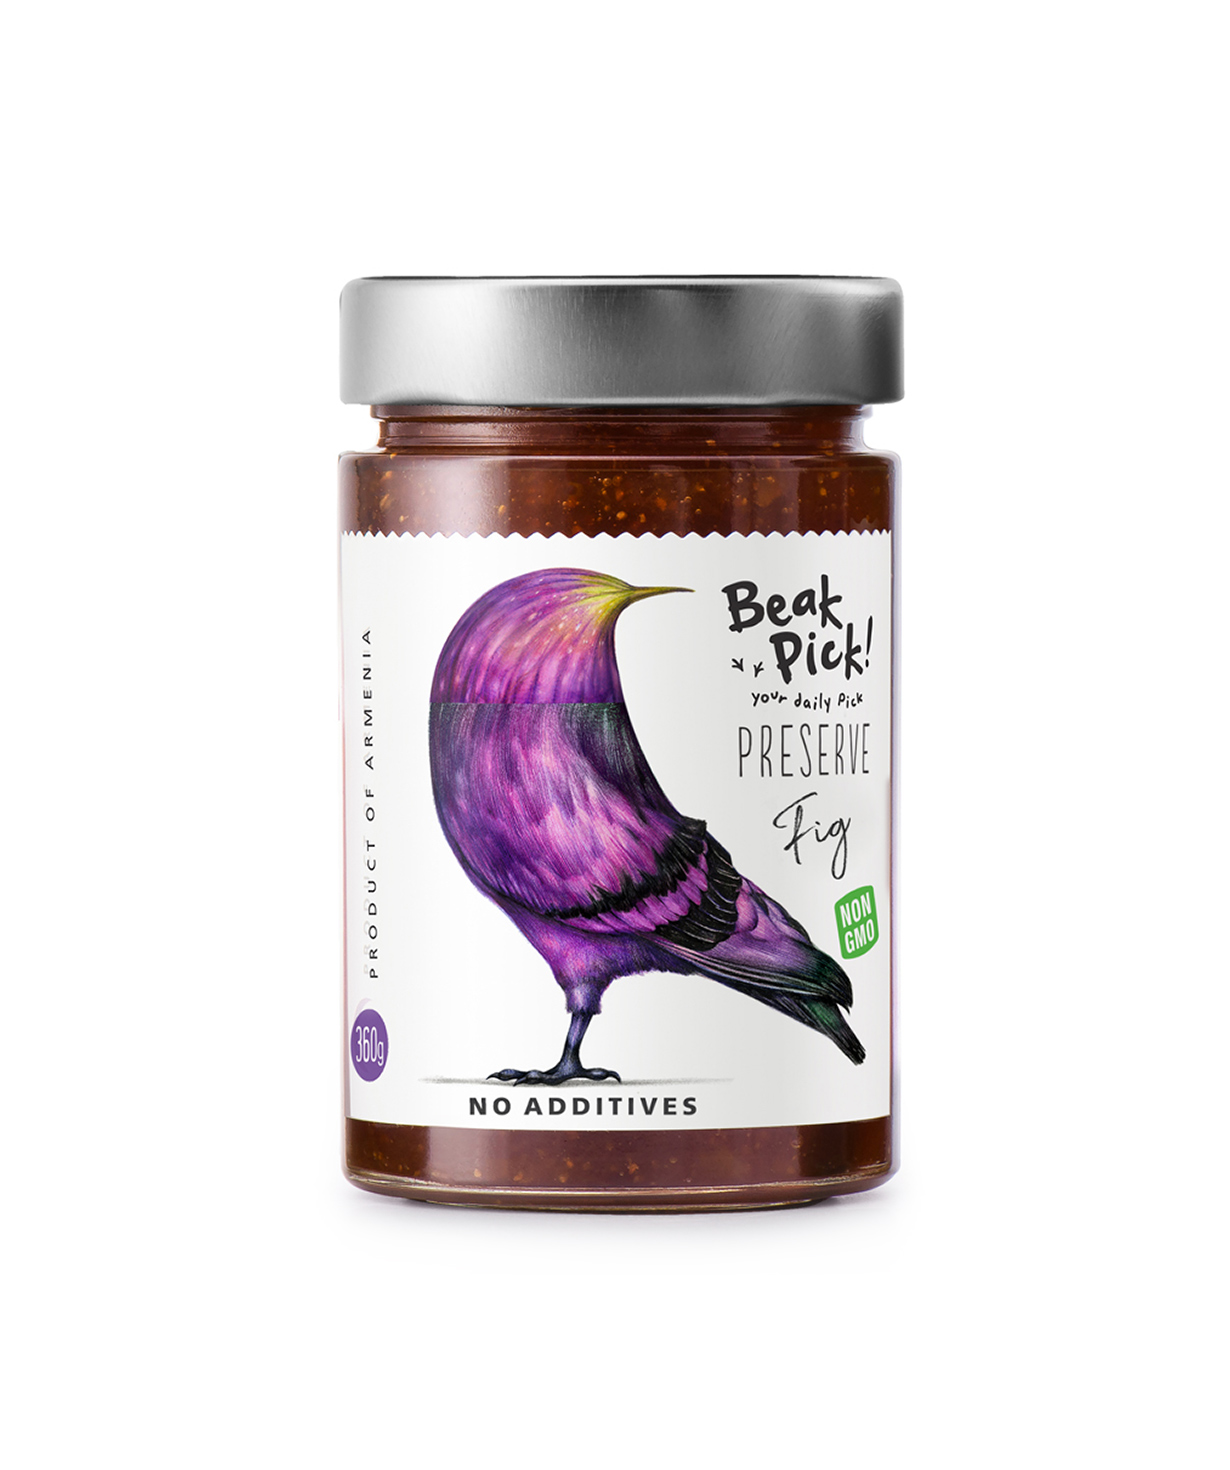 Preserve `Beak Pick!` fig